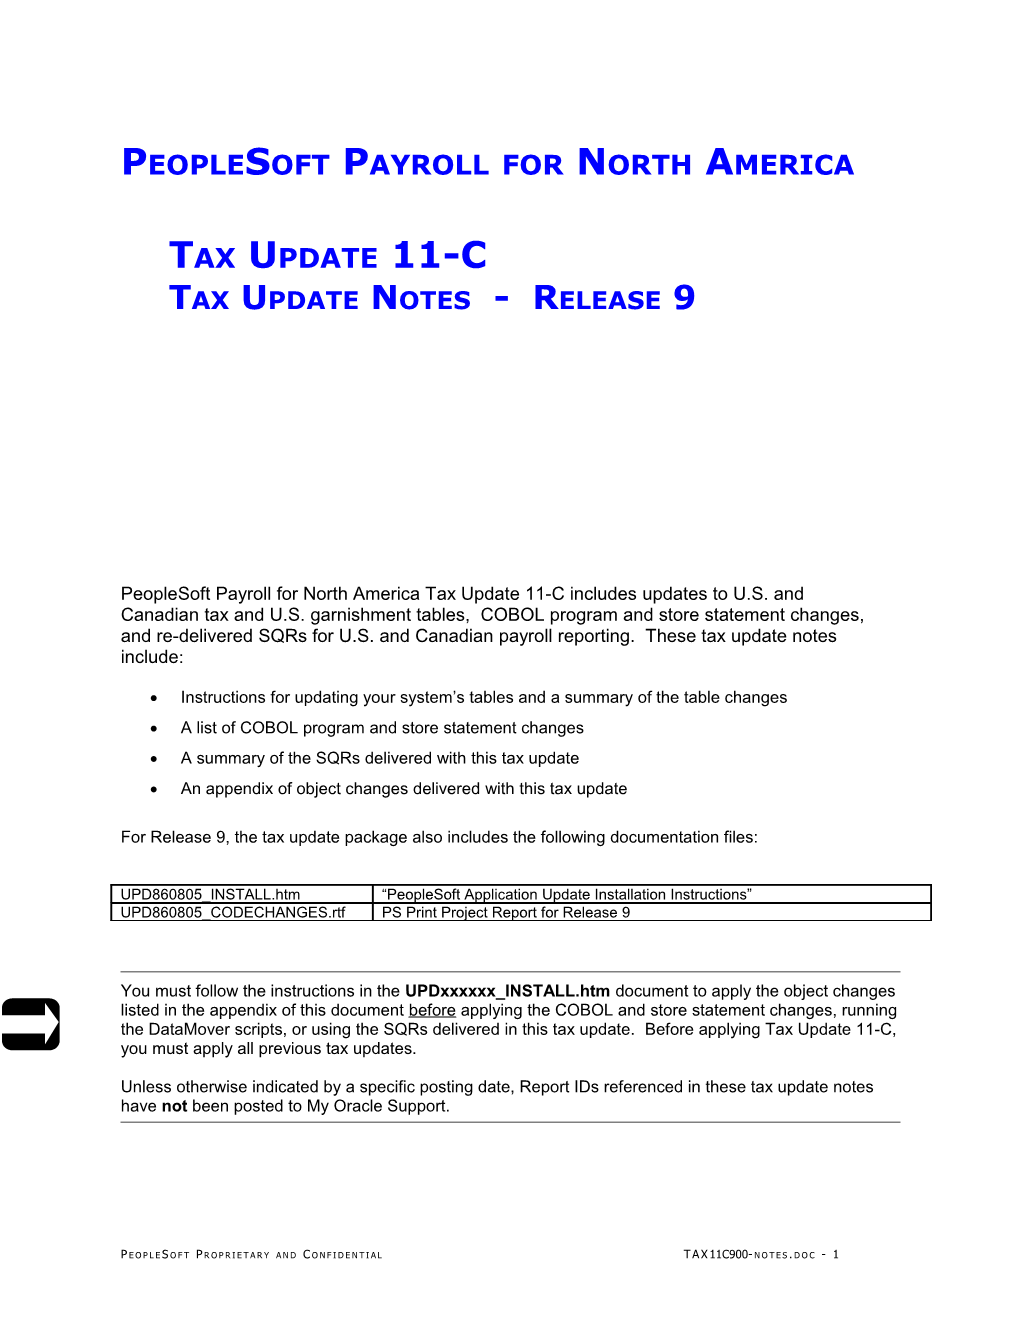 9.00 - Peoplesoft Payroll Tax Update 11-C